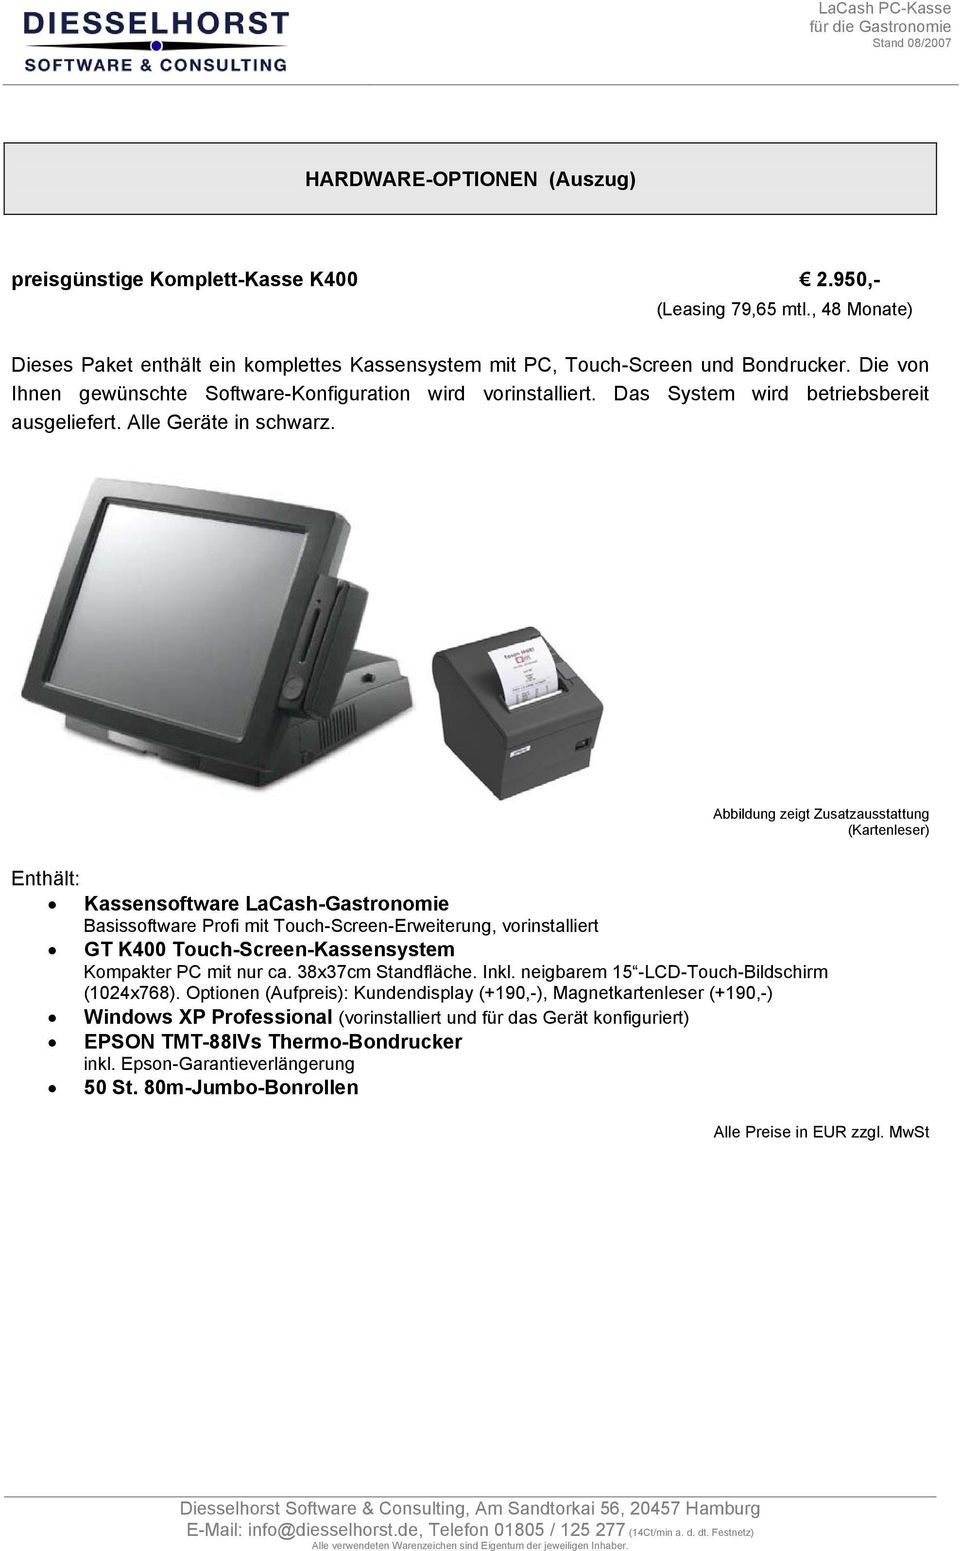 Abbildung zeigt Zusatzausstattung (Kartenleser) Enthält: Kassensoftware LaCash-Gastronomie Basissoftware Profi mit Touch-Screen-Erweiterung, vorinstalliert GT K400 Touch-Screen-Kassensystem Kompakter